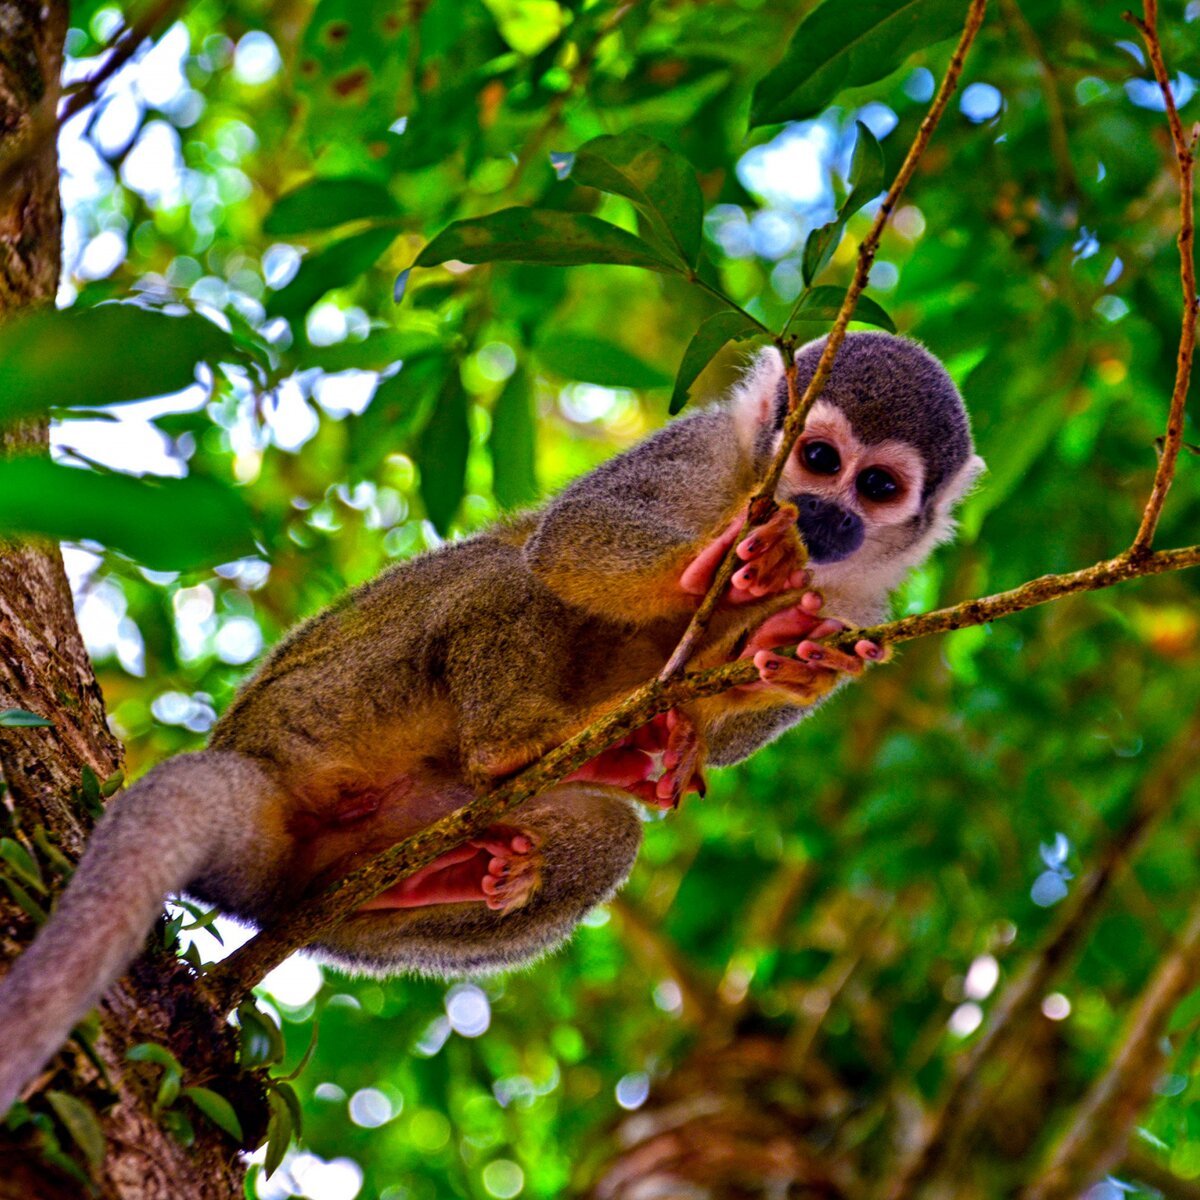 Cute monkey sitting on a tree branch